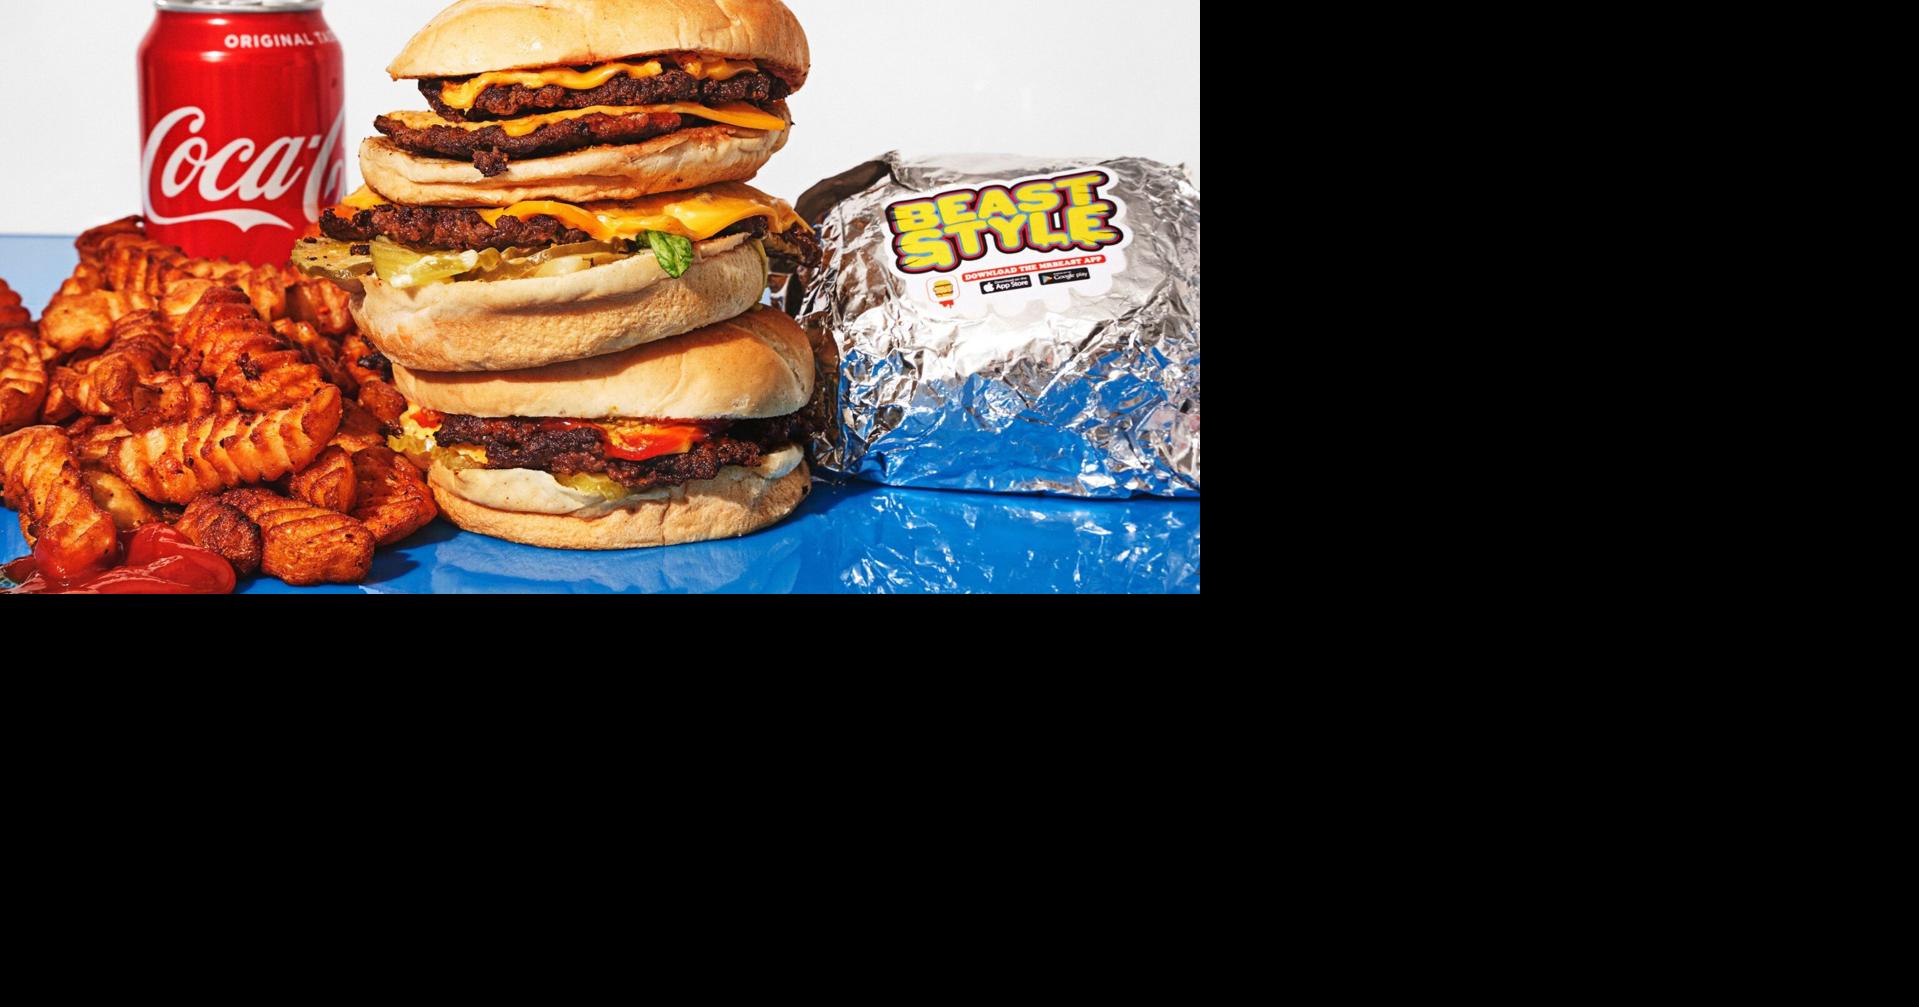 American Dream  MrBeast Burger